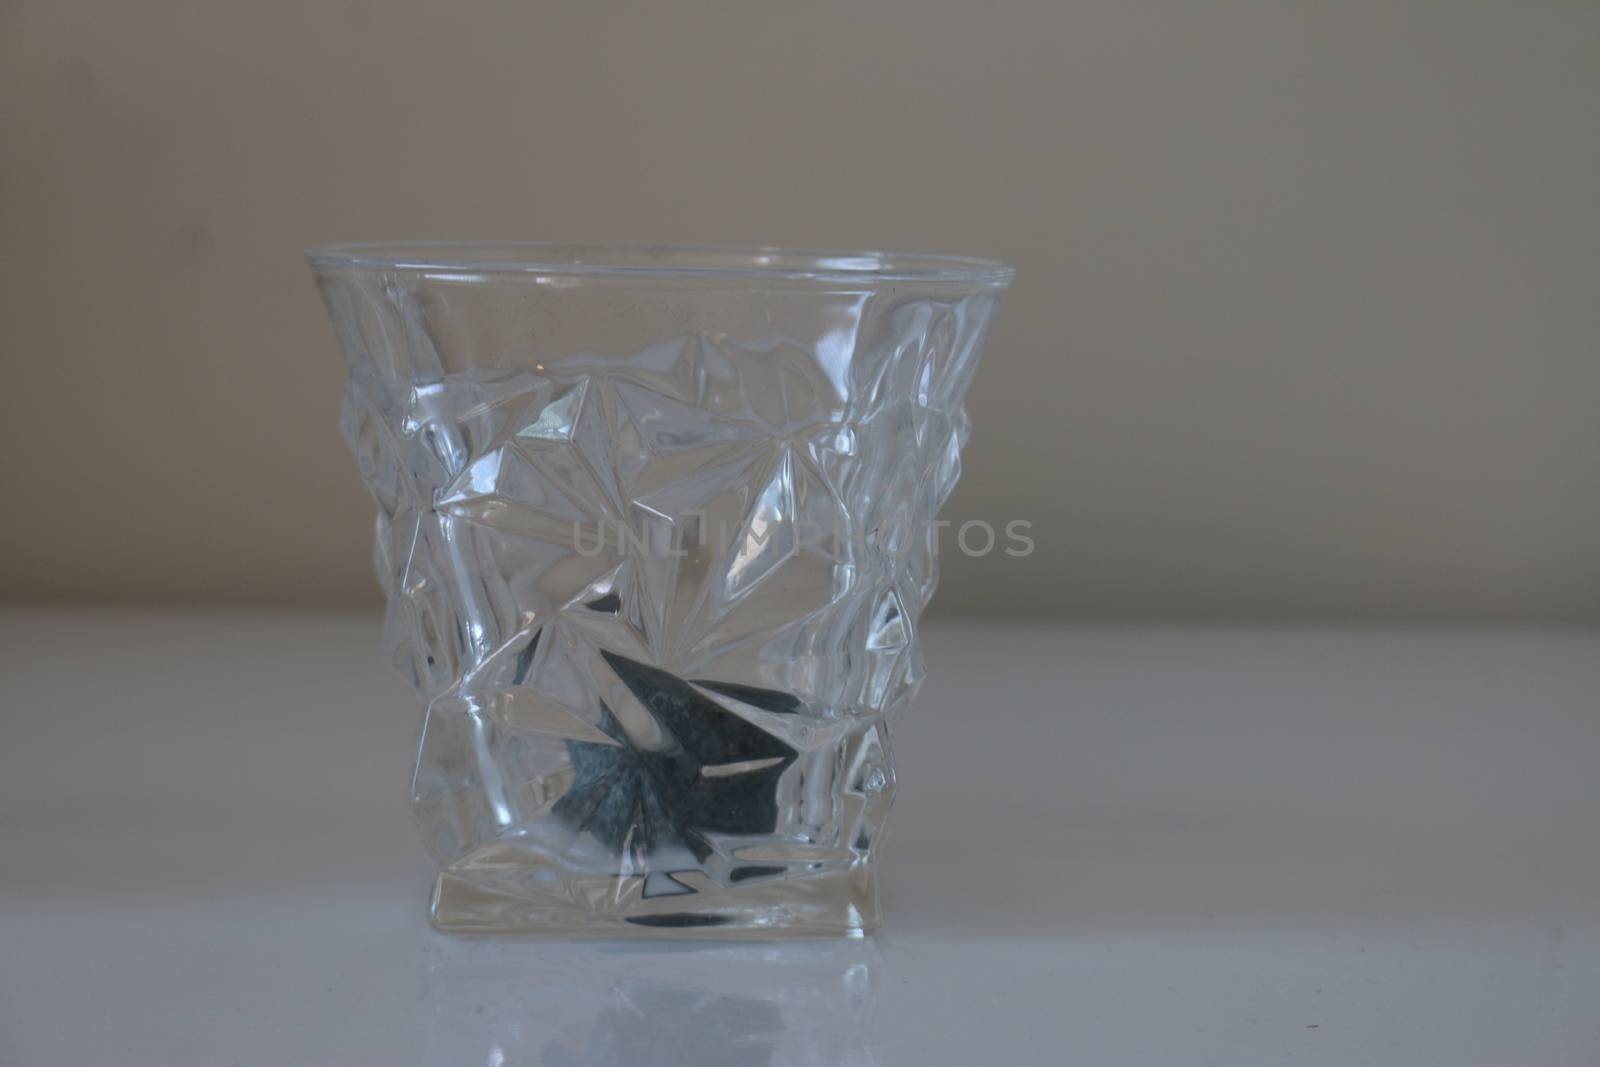 Whiskey glass and stone, studio stock photo 